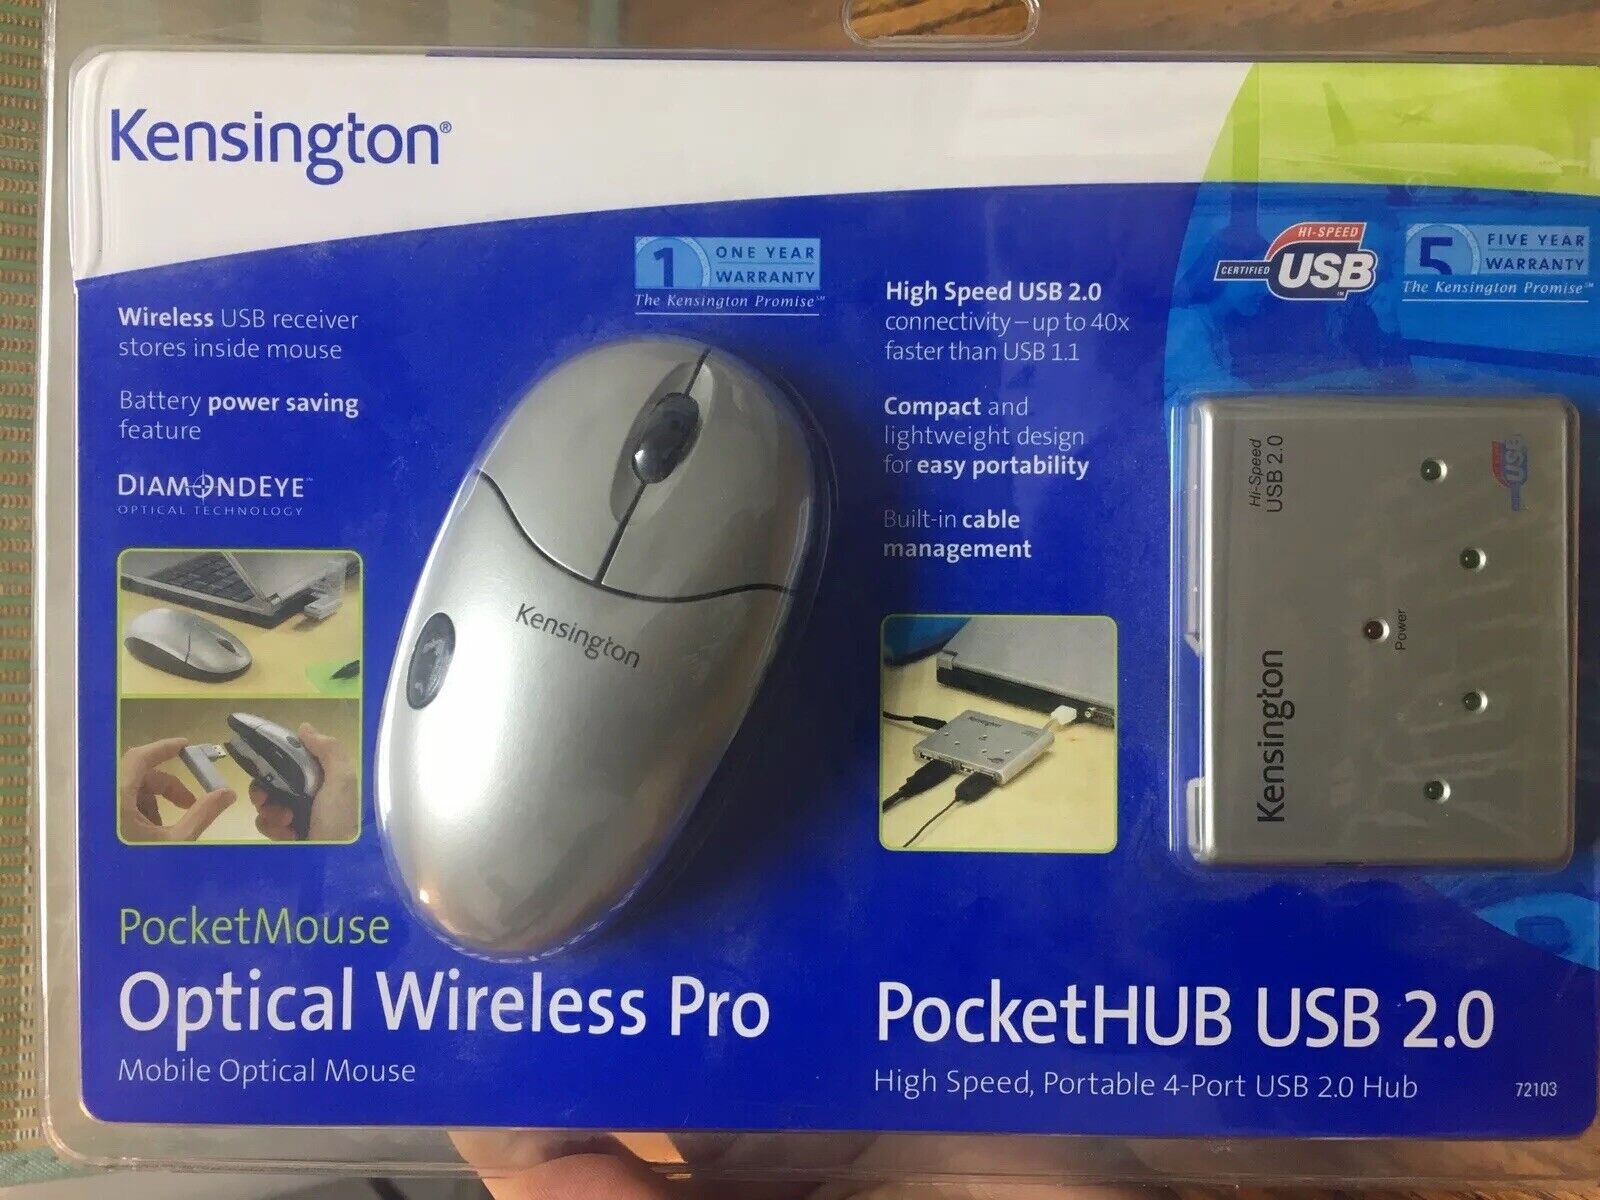 NOS New/Sealed* Kensington Optical Wireless USB Pro Mobile Pocket Mouse 72103